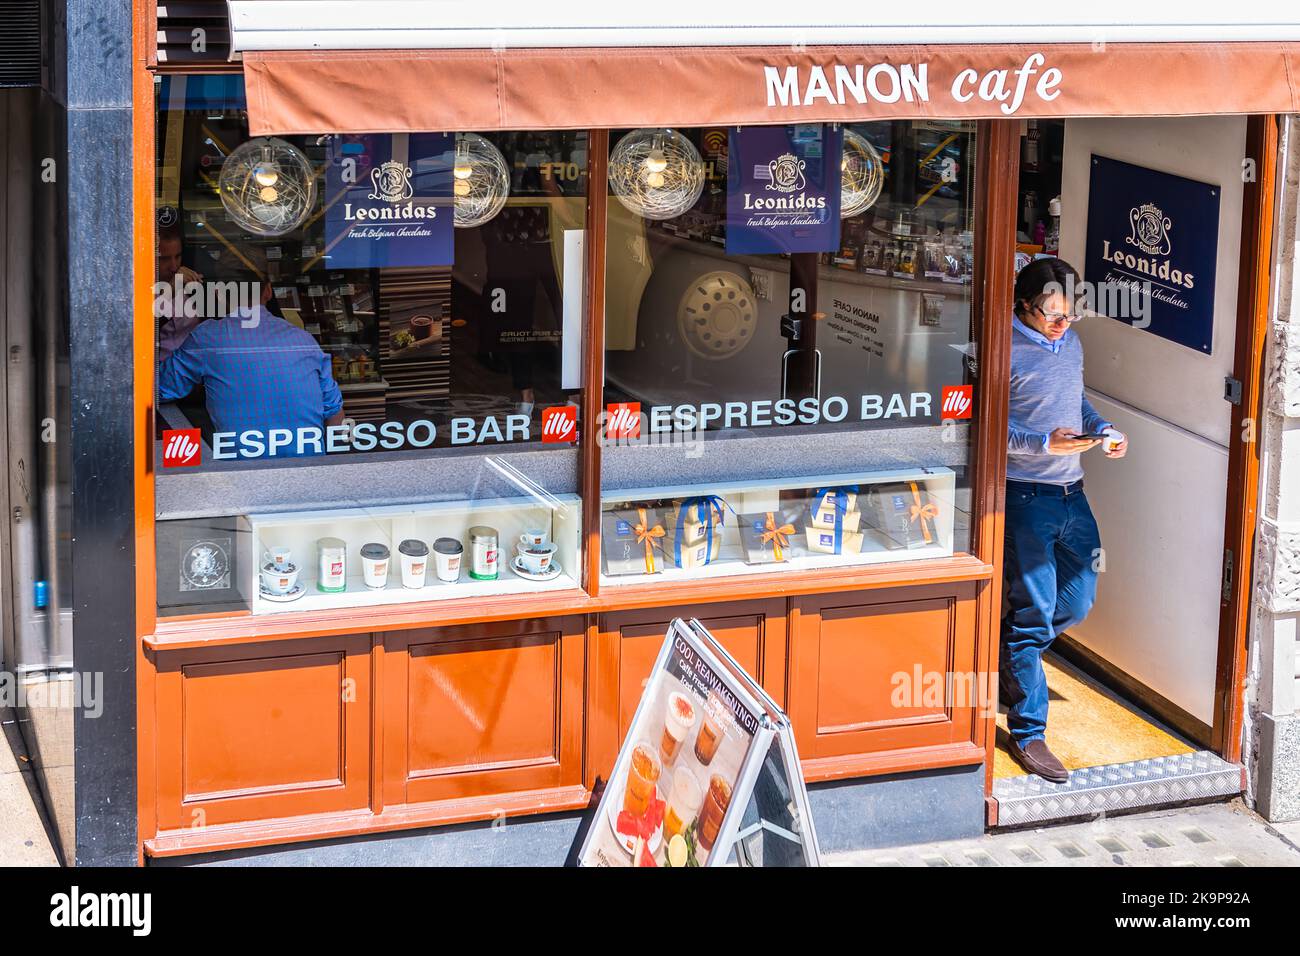 London, United Kingdom - June 22, 2018: Manon cafe restaurant bakery serving Leonidas fresh belgian hot chocolate with businessman on Fleet Street Stock Photo